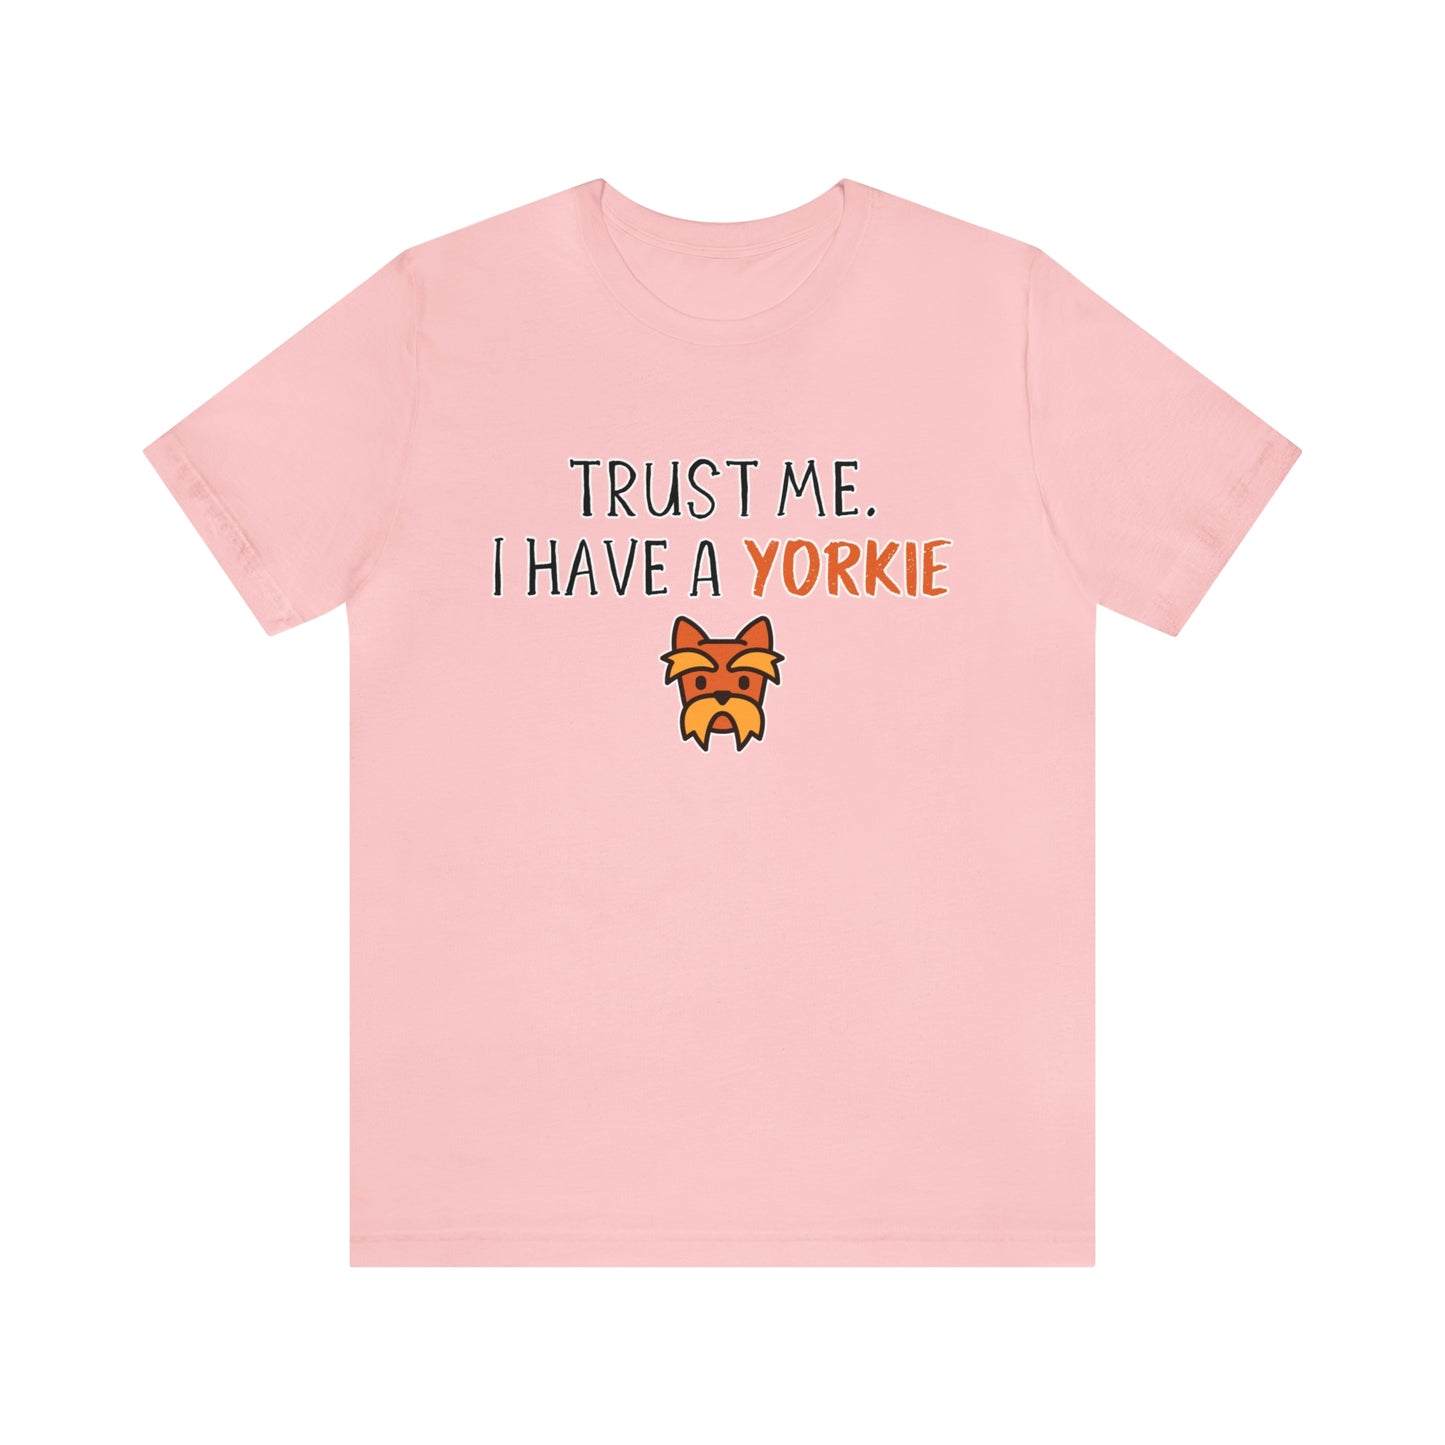 Yorkshire Terrier t shirt pink